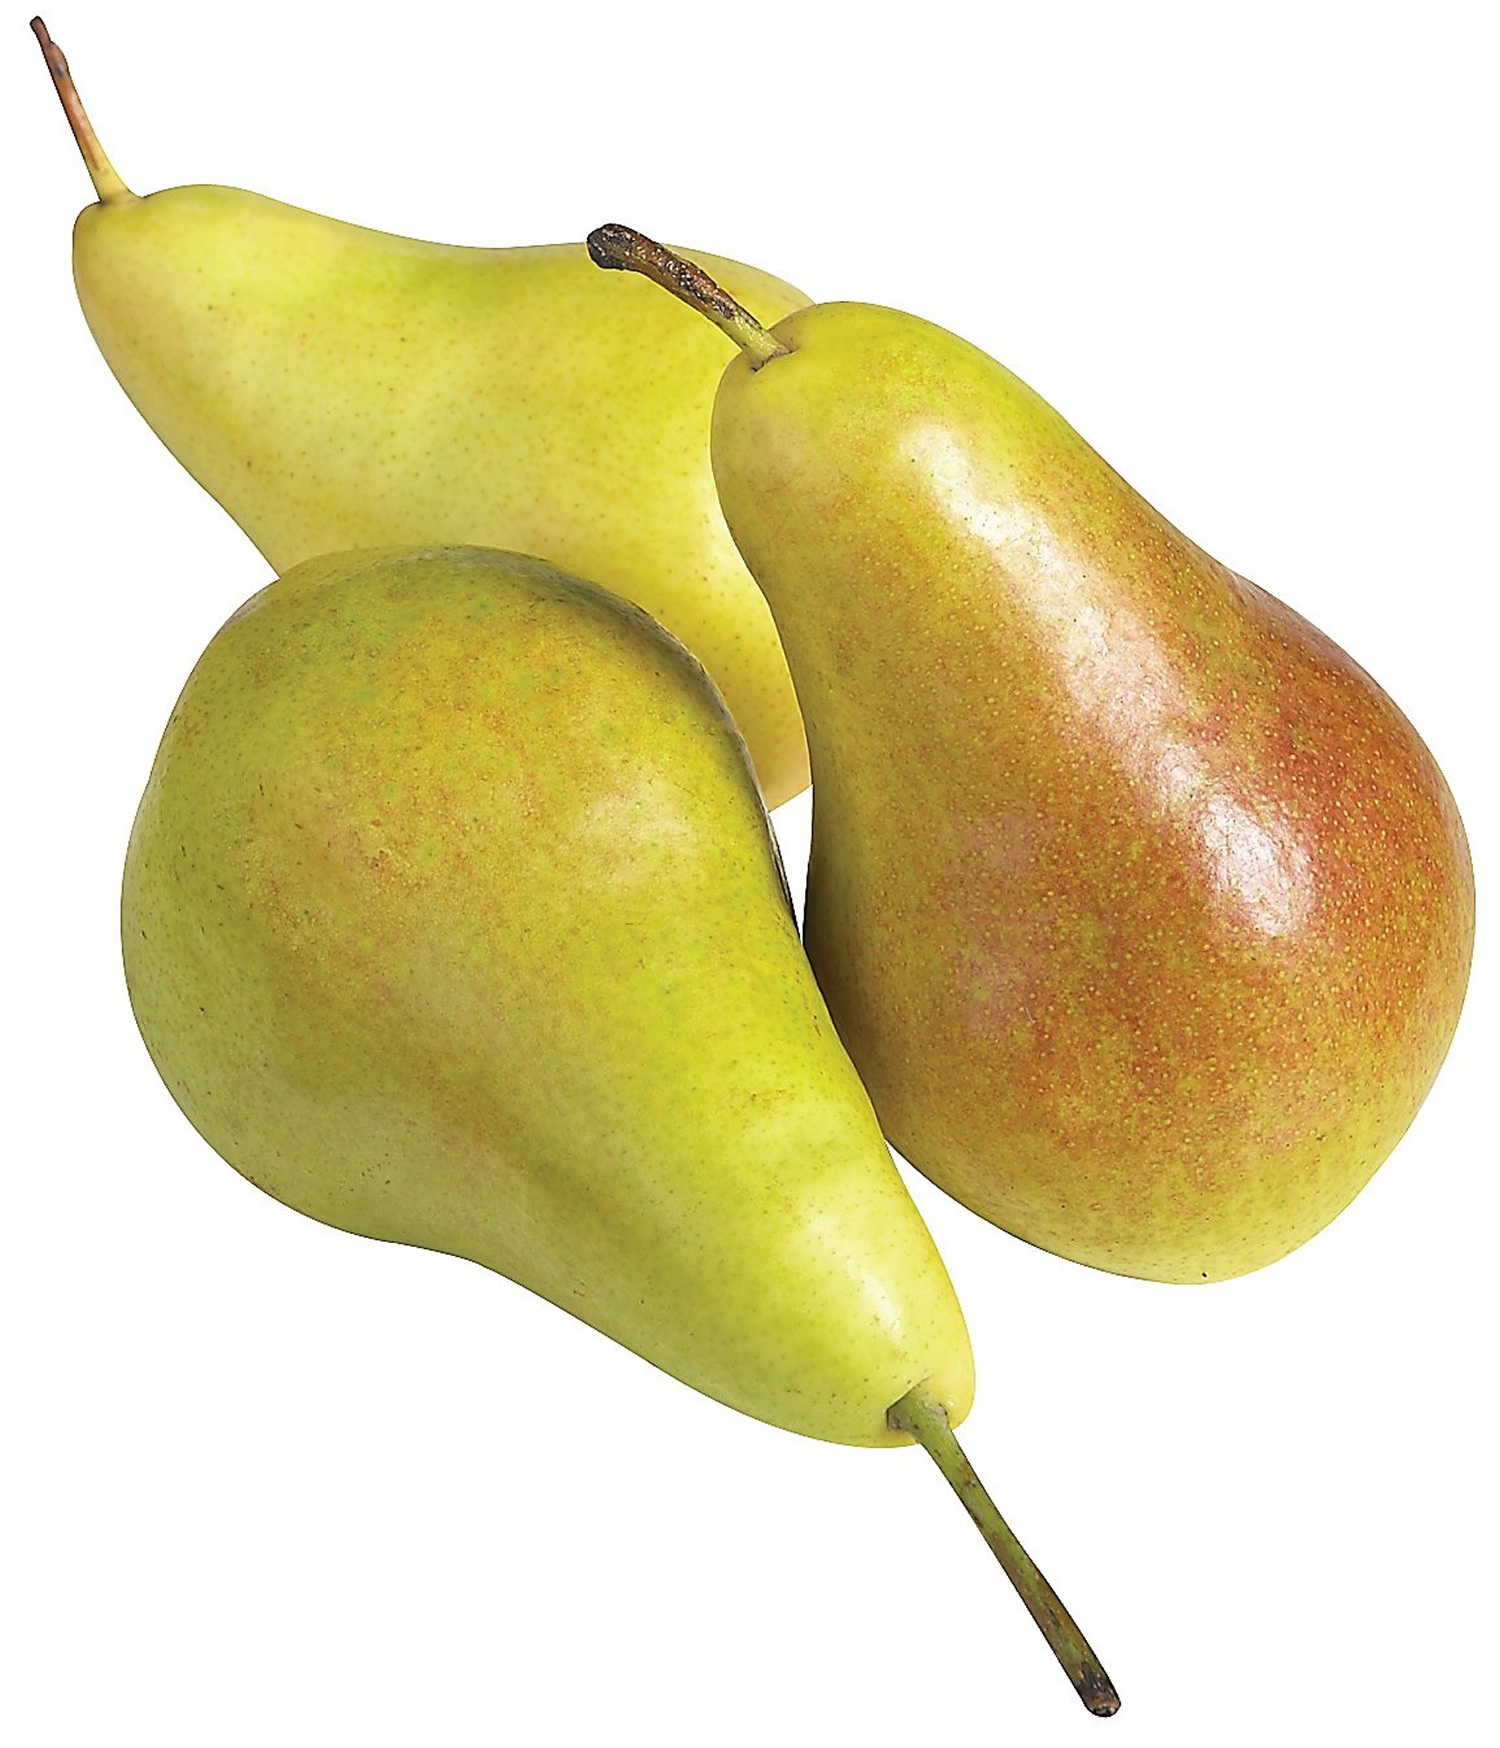 Concorde pears